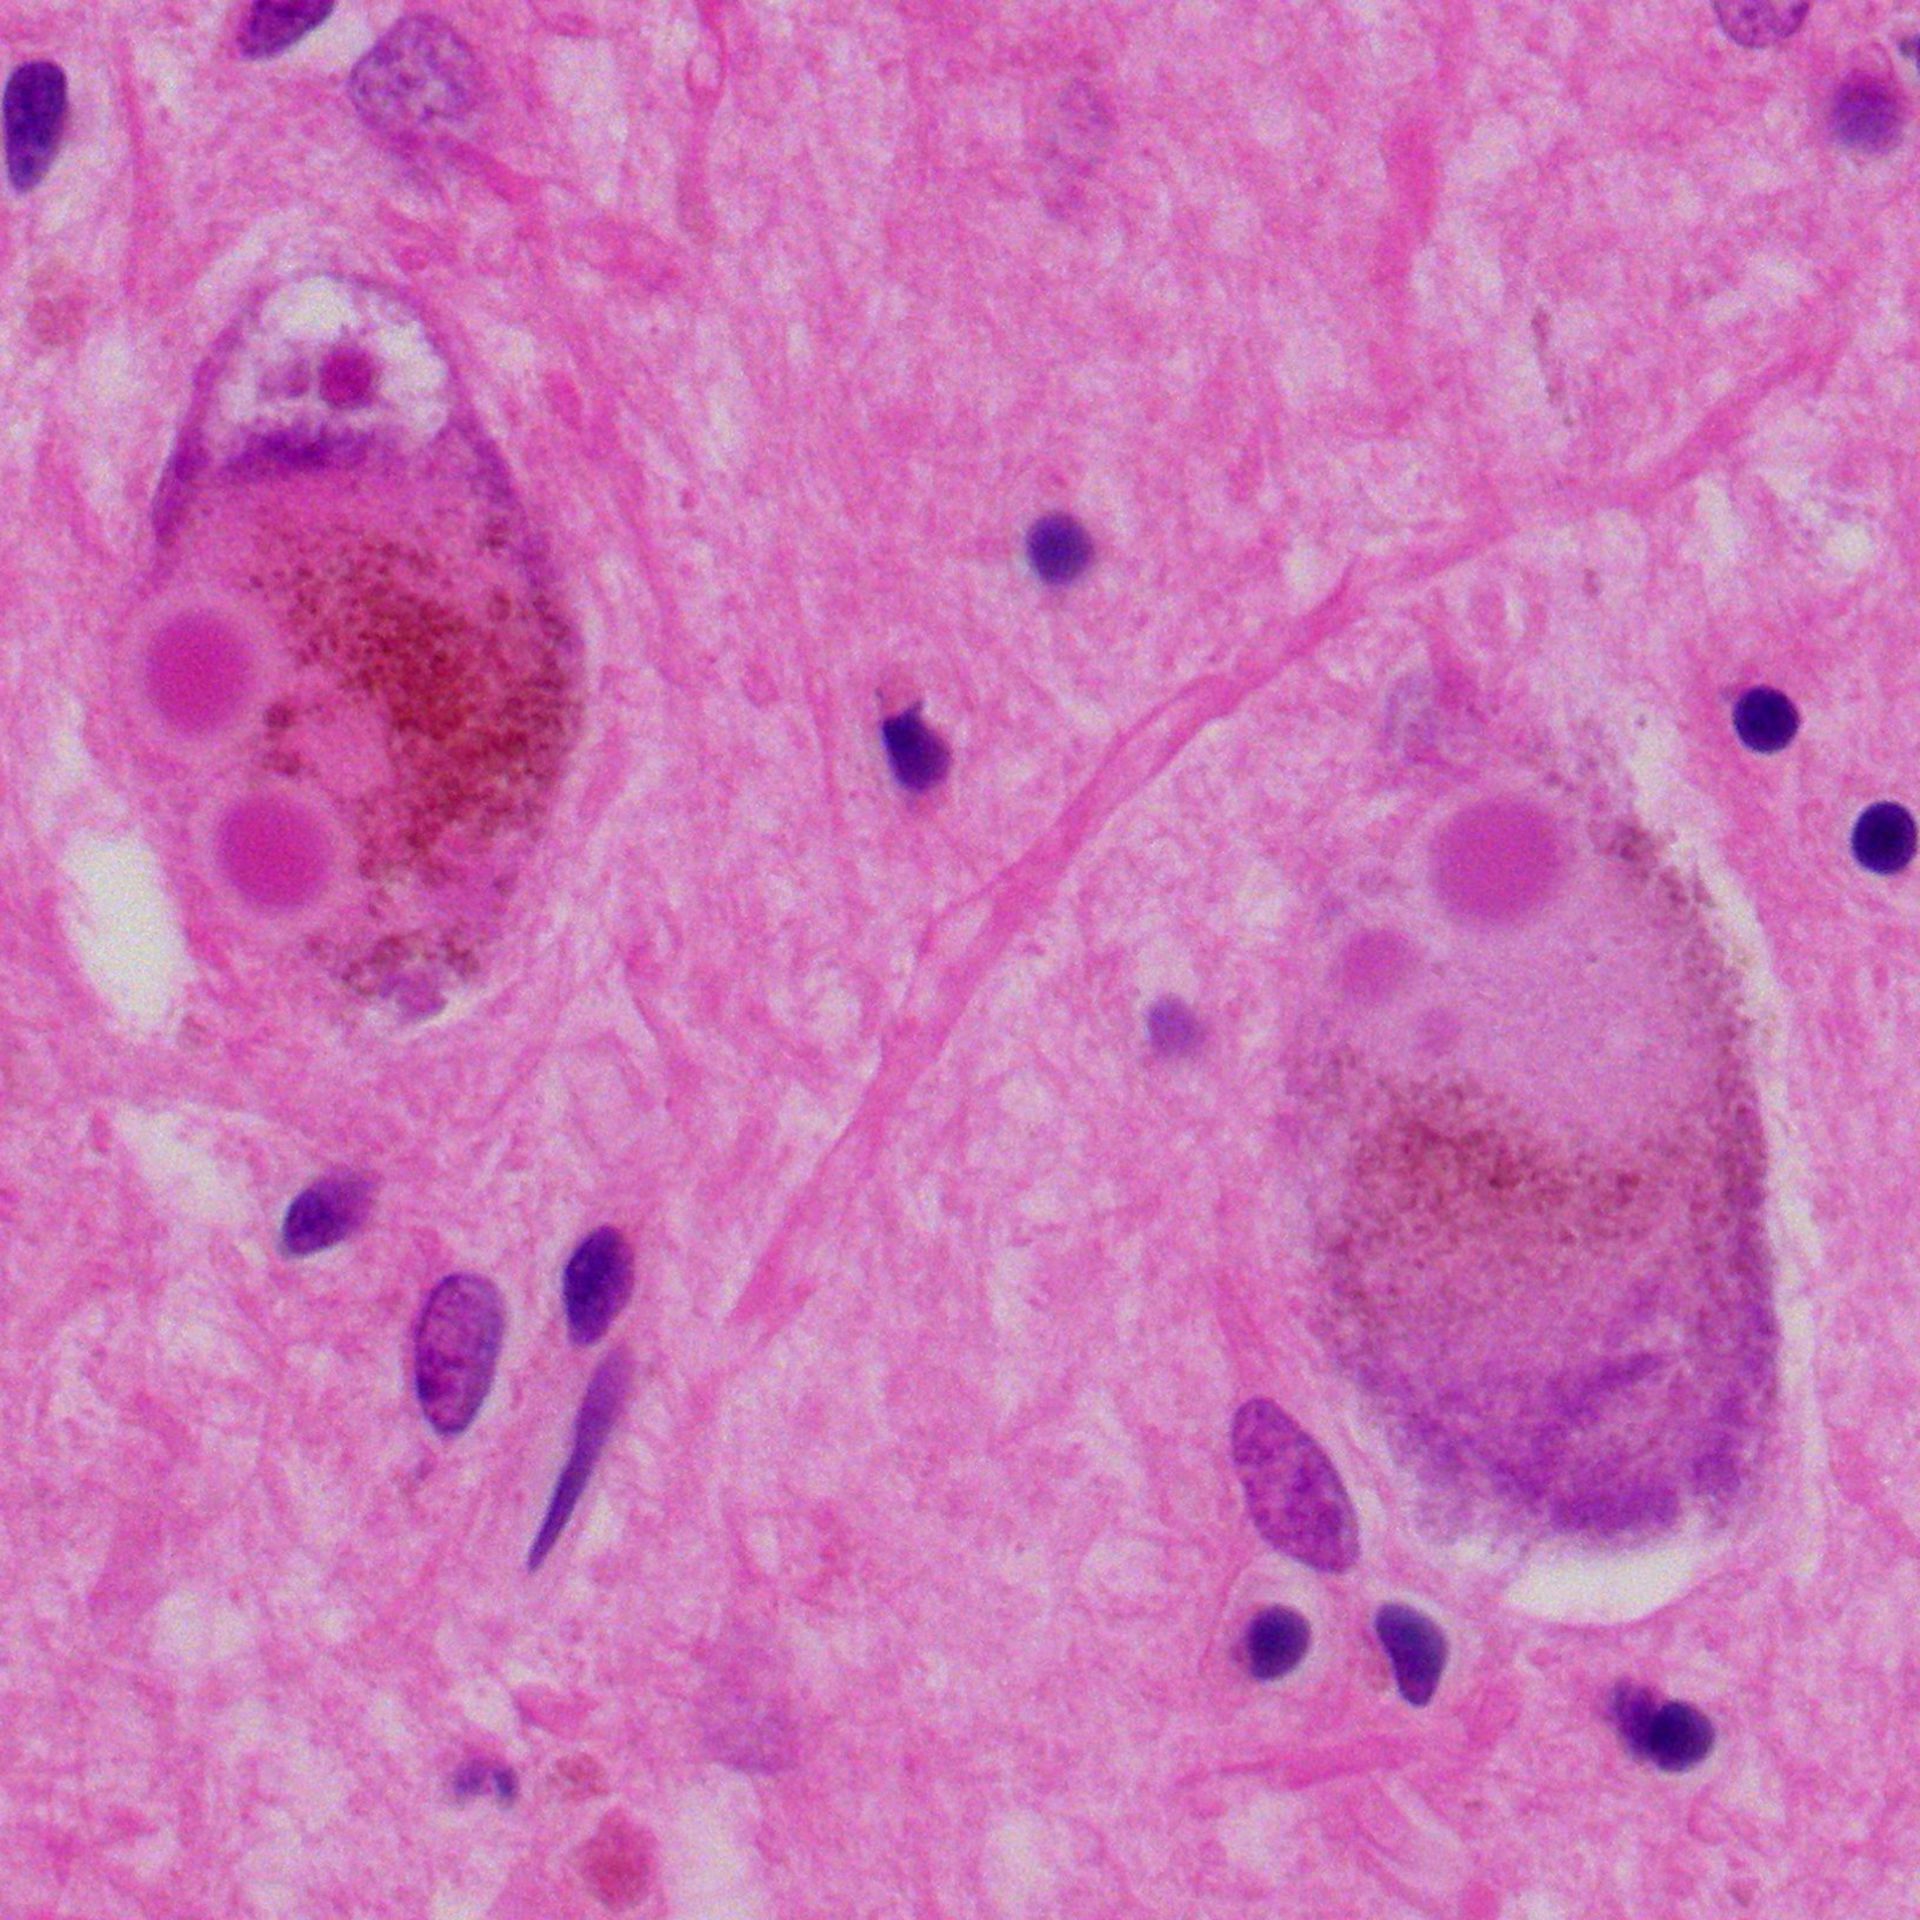 Lewy bodies (substantia nigra)